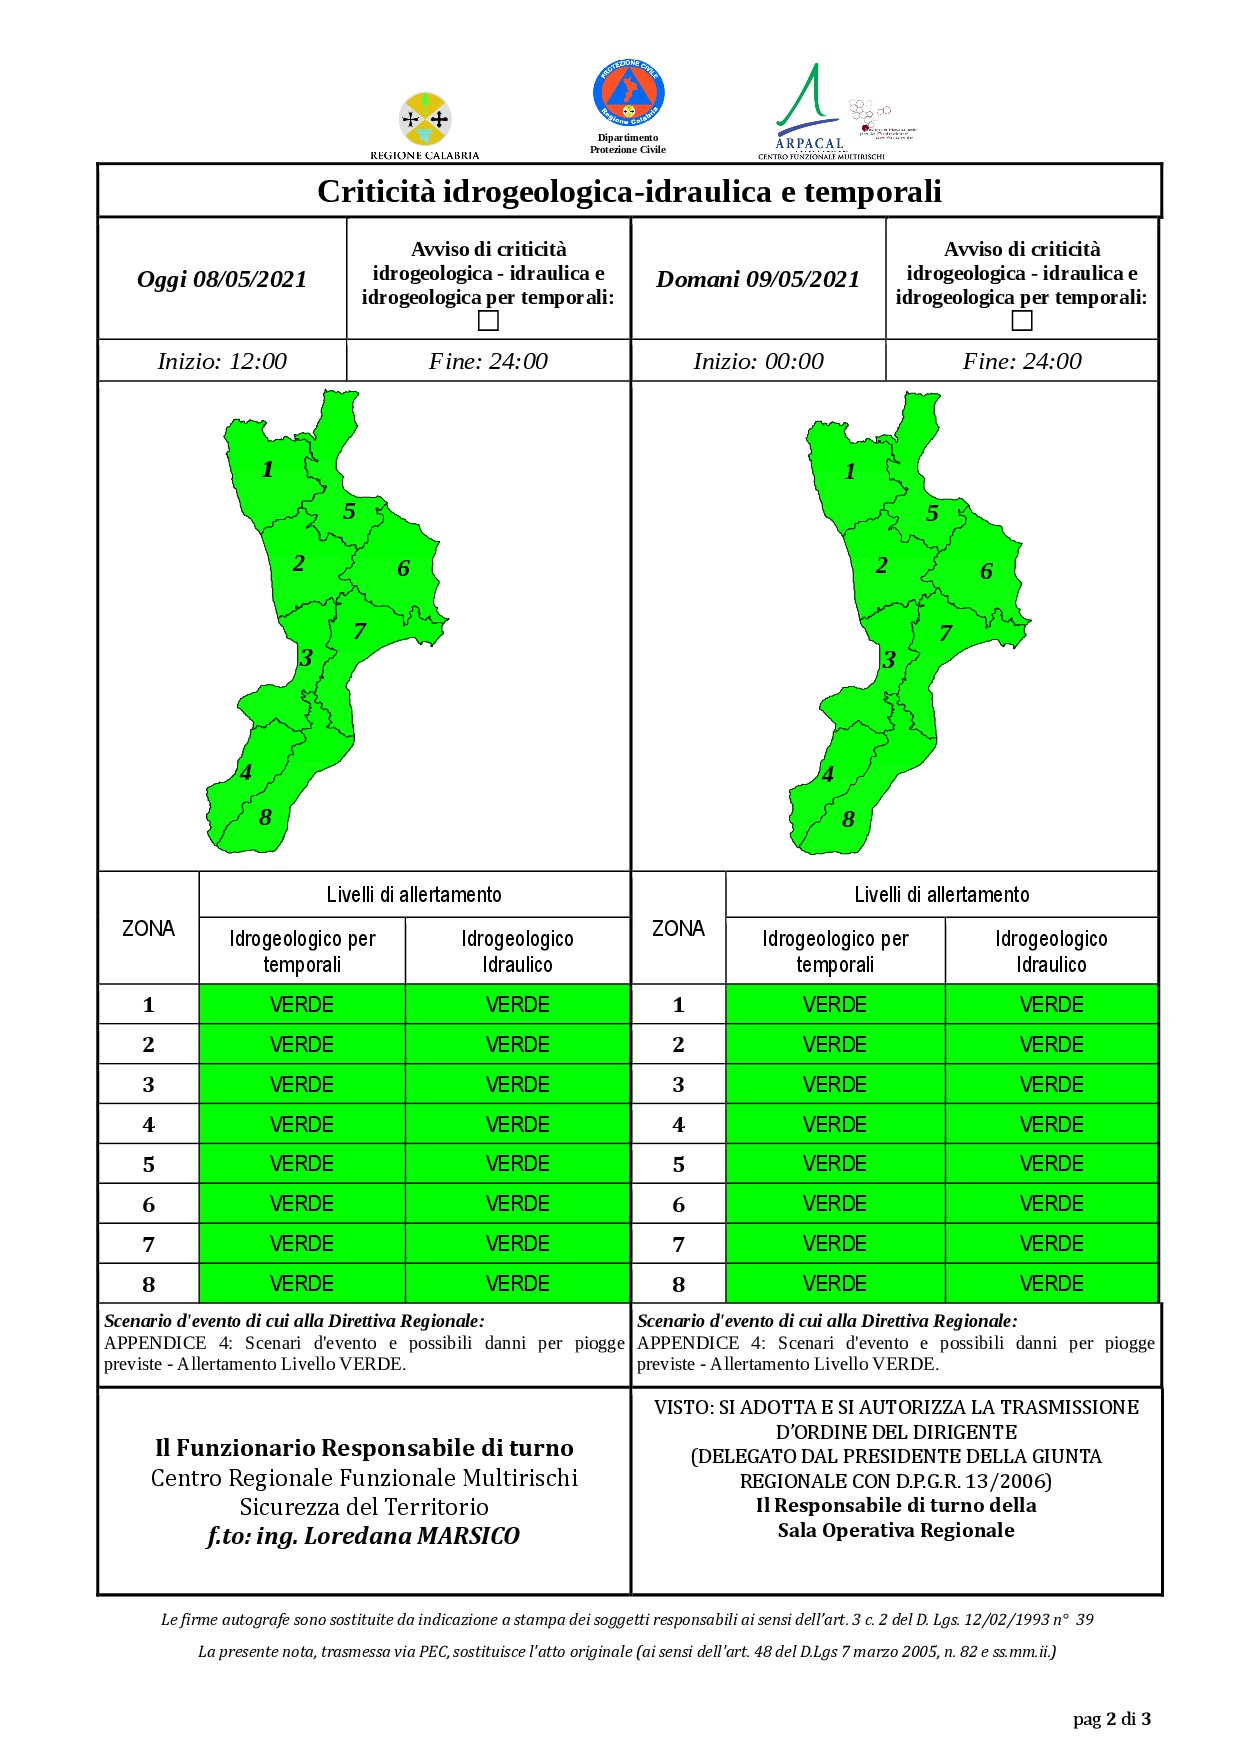 Criticità idrogeologica-idraulica e temporali in Calabria 08-05-2021